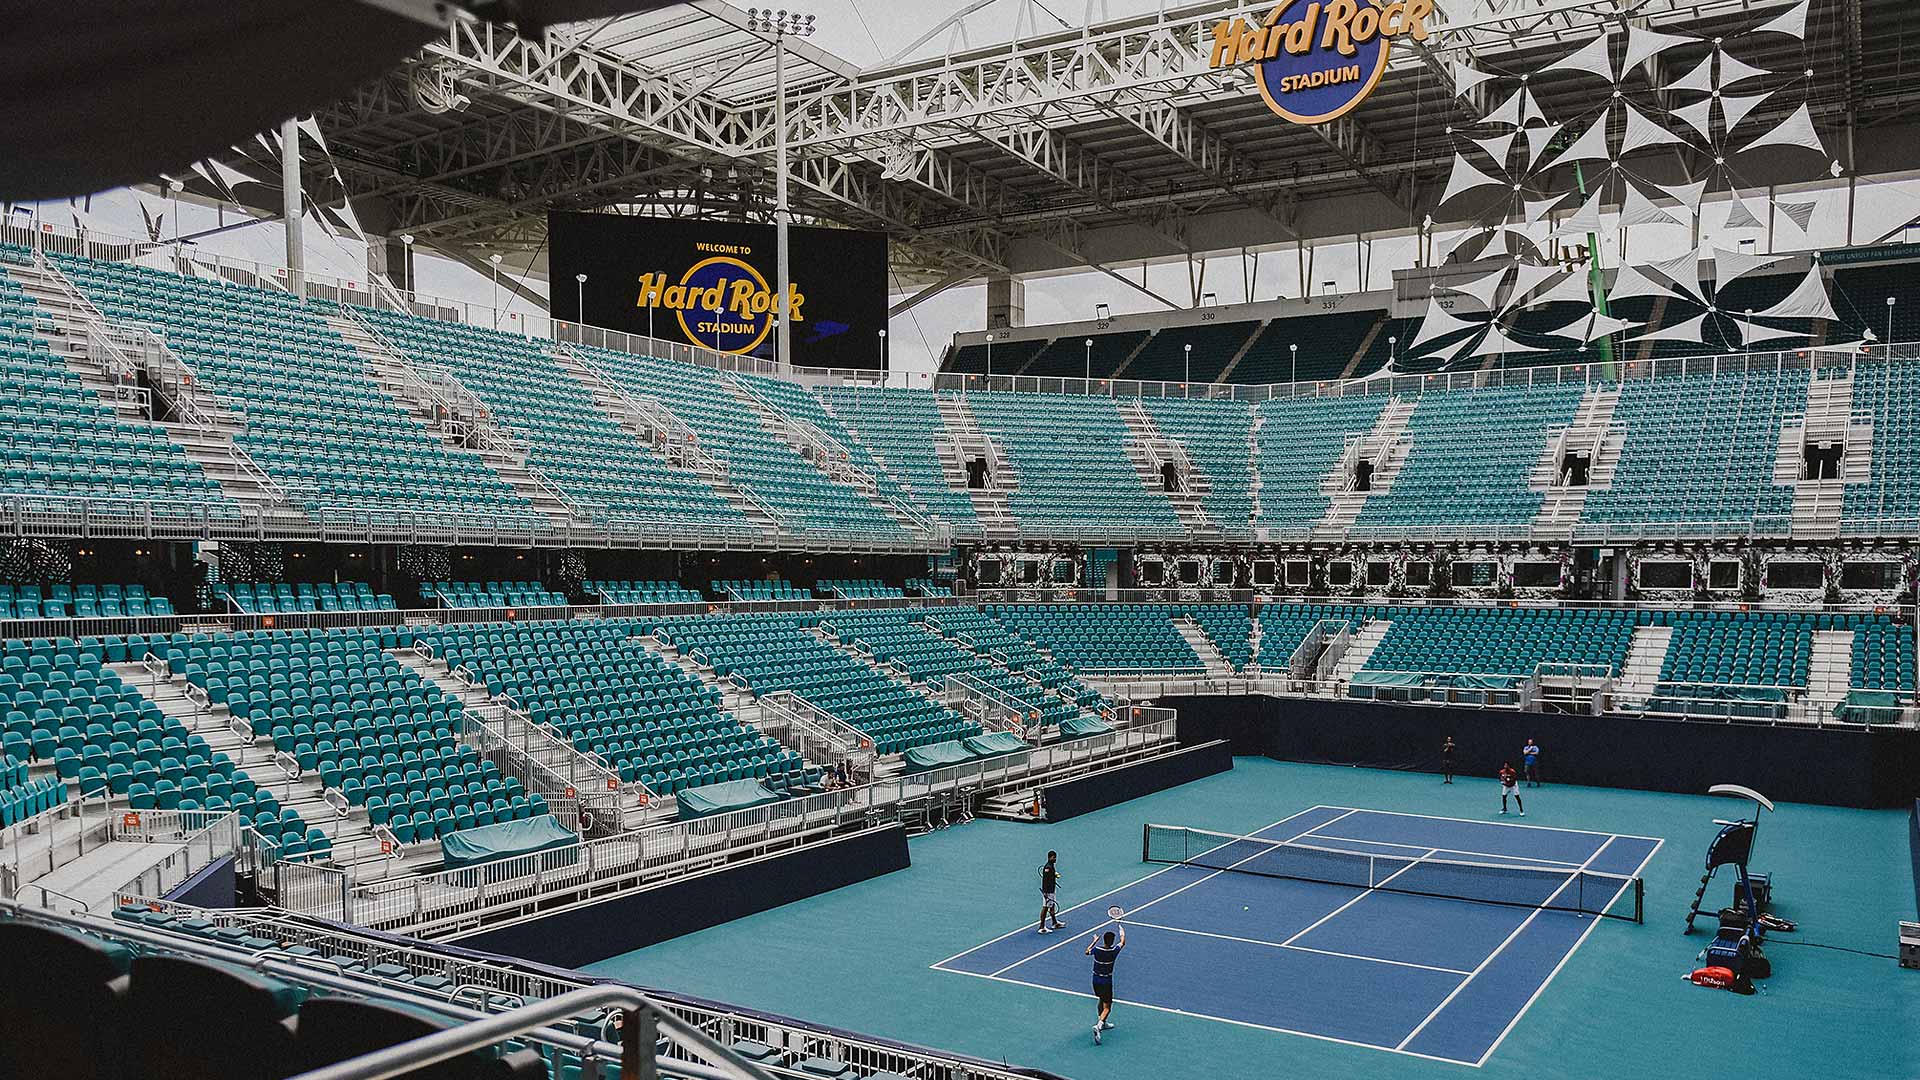 Atp Tennis Miami 2019 Live Scores Wasfa Blog